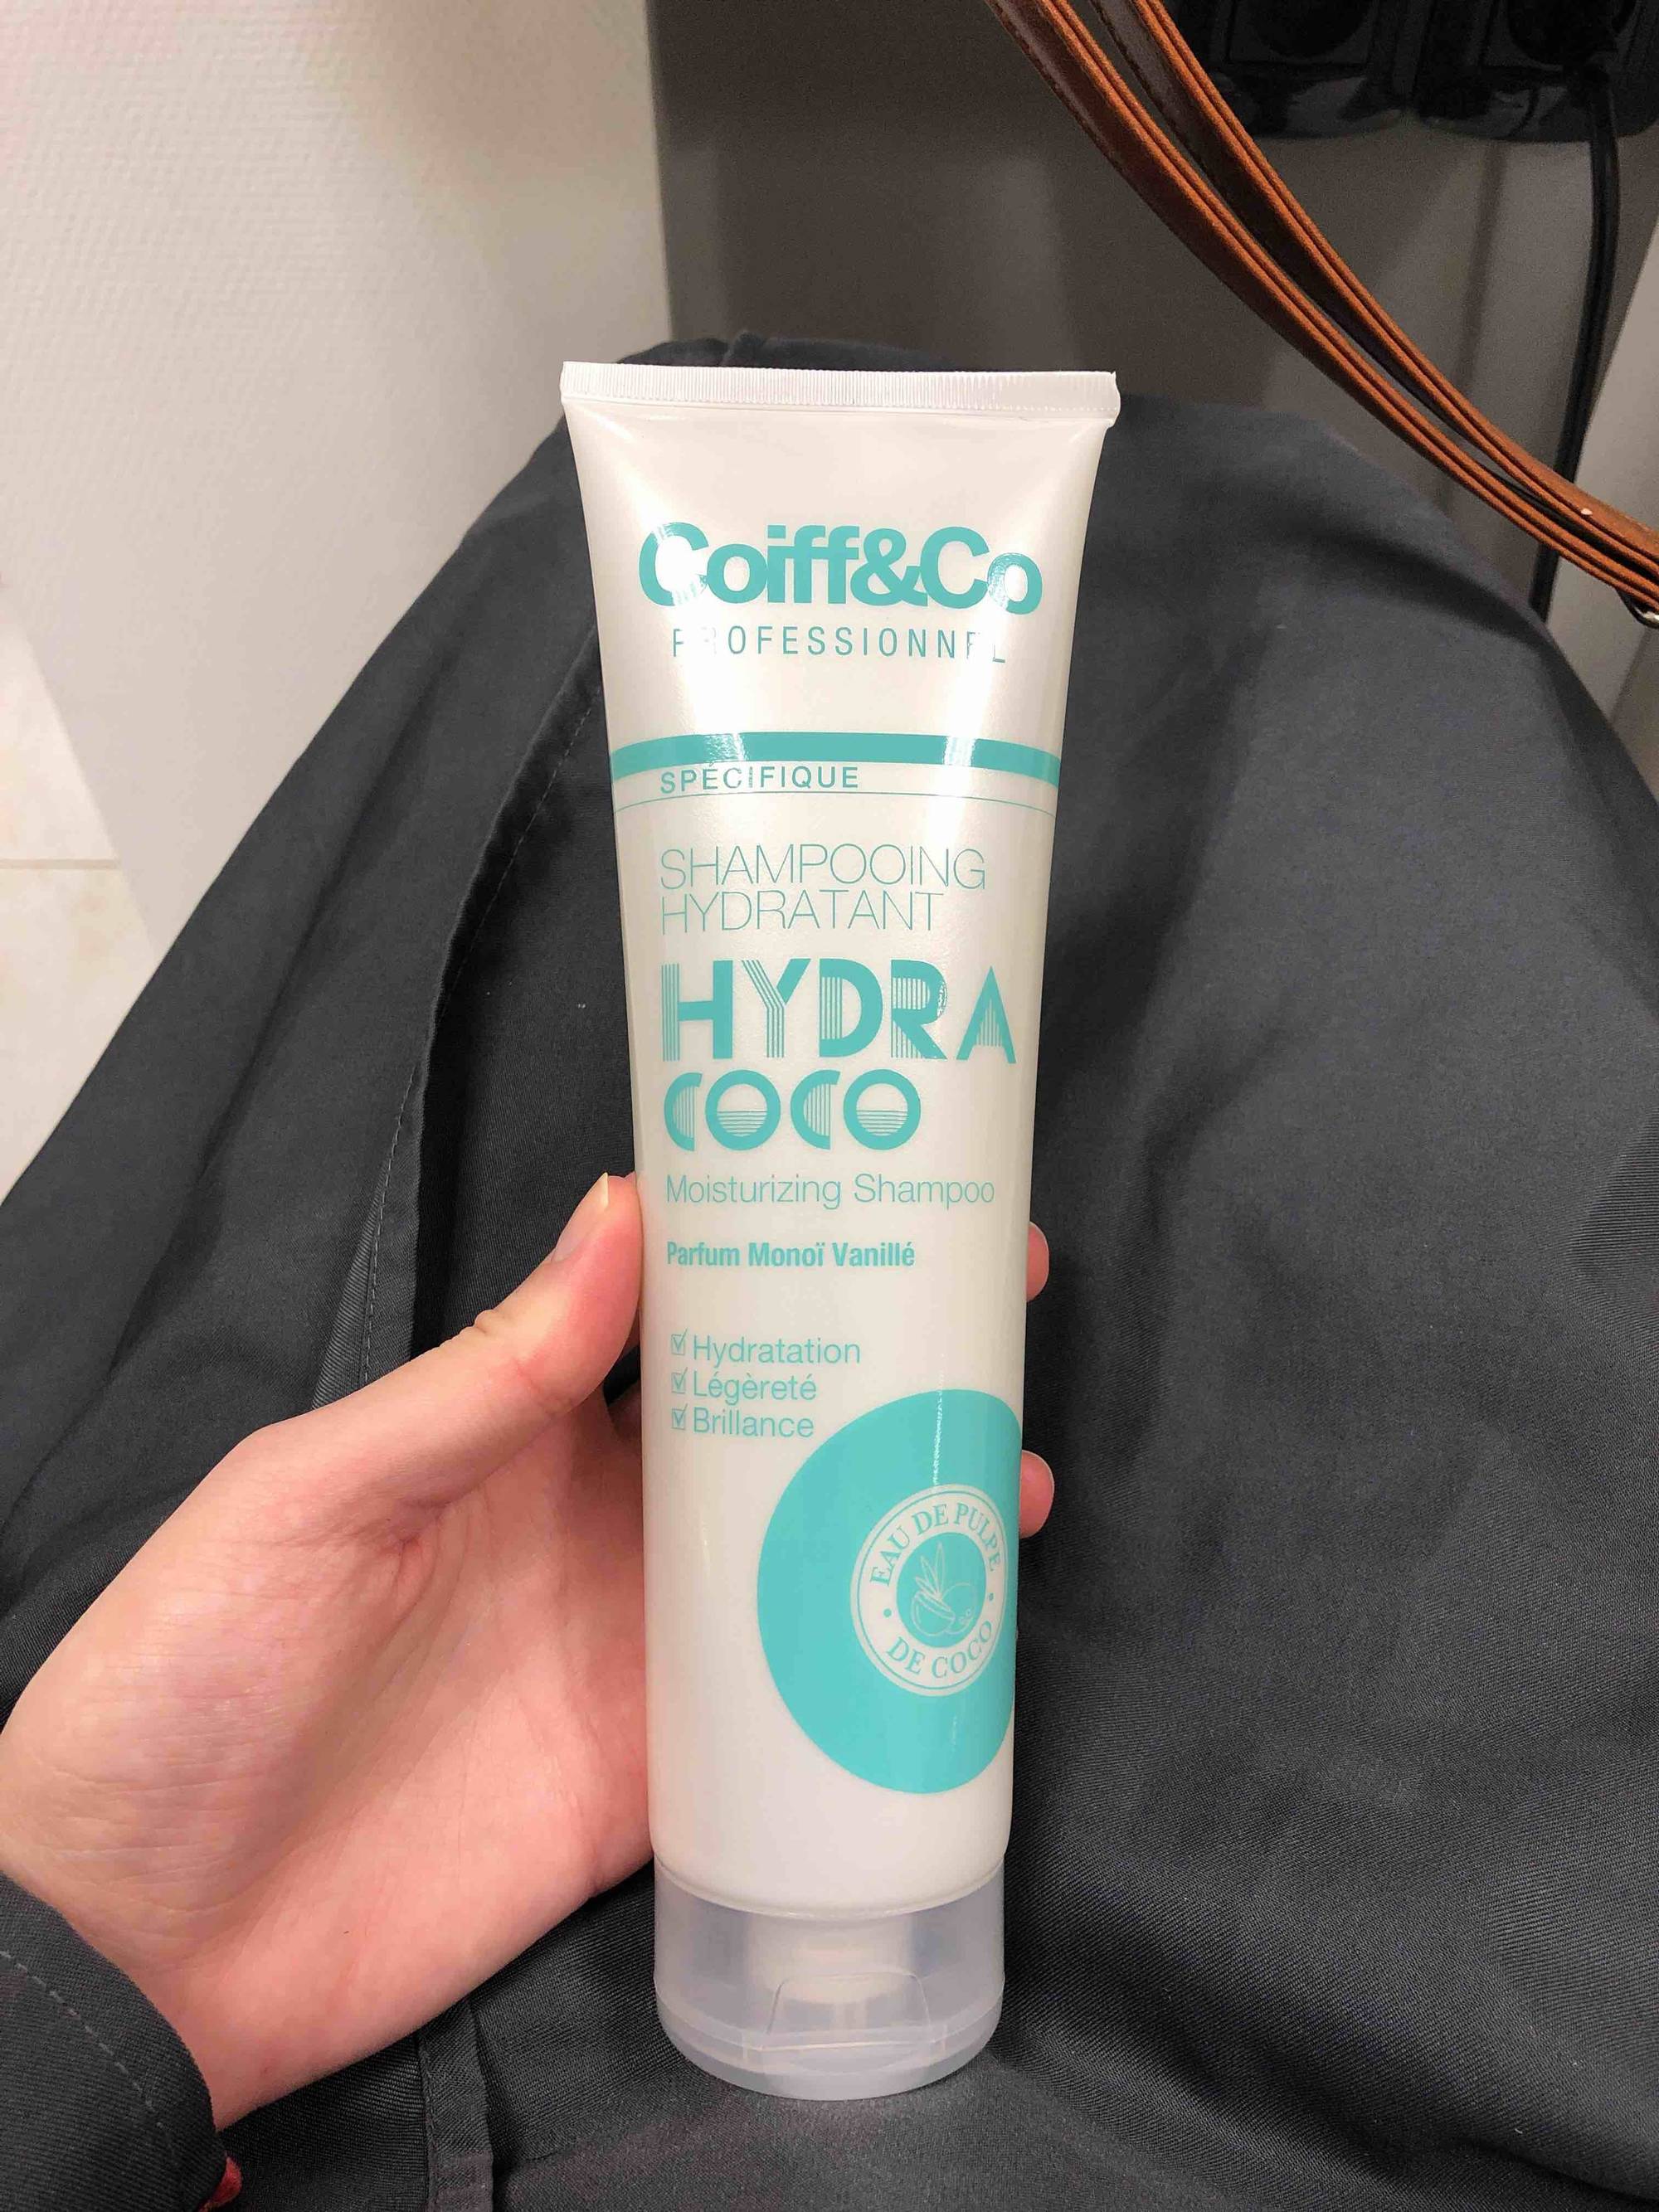 COIFF&CO PROFESSIONNEL - Shampooing hydratant - Hydra coco